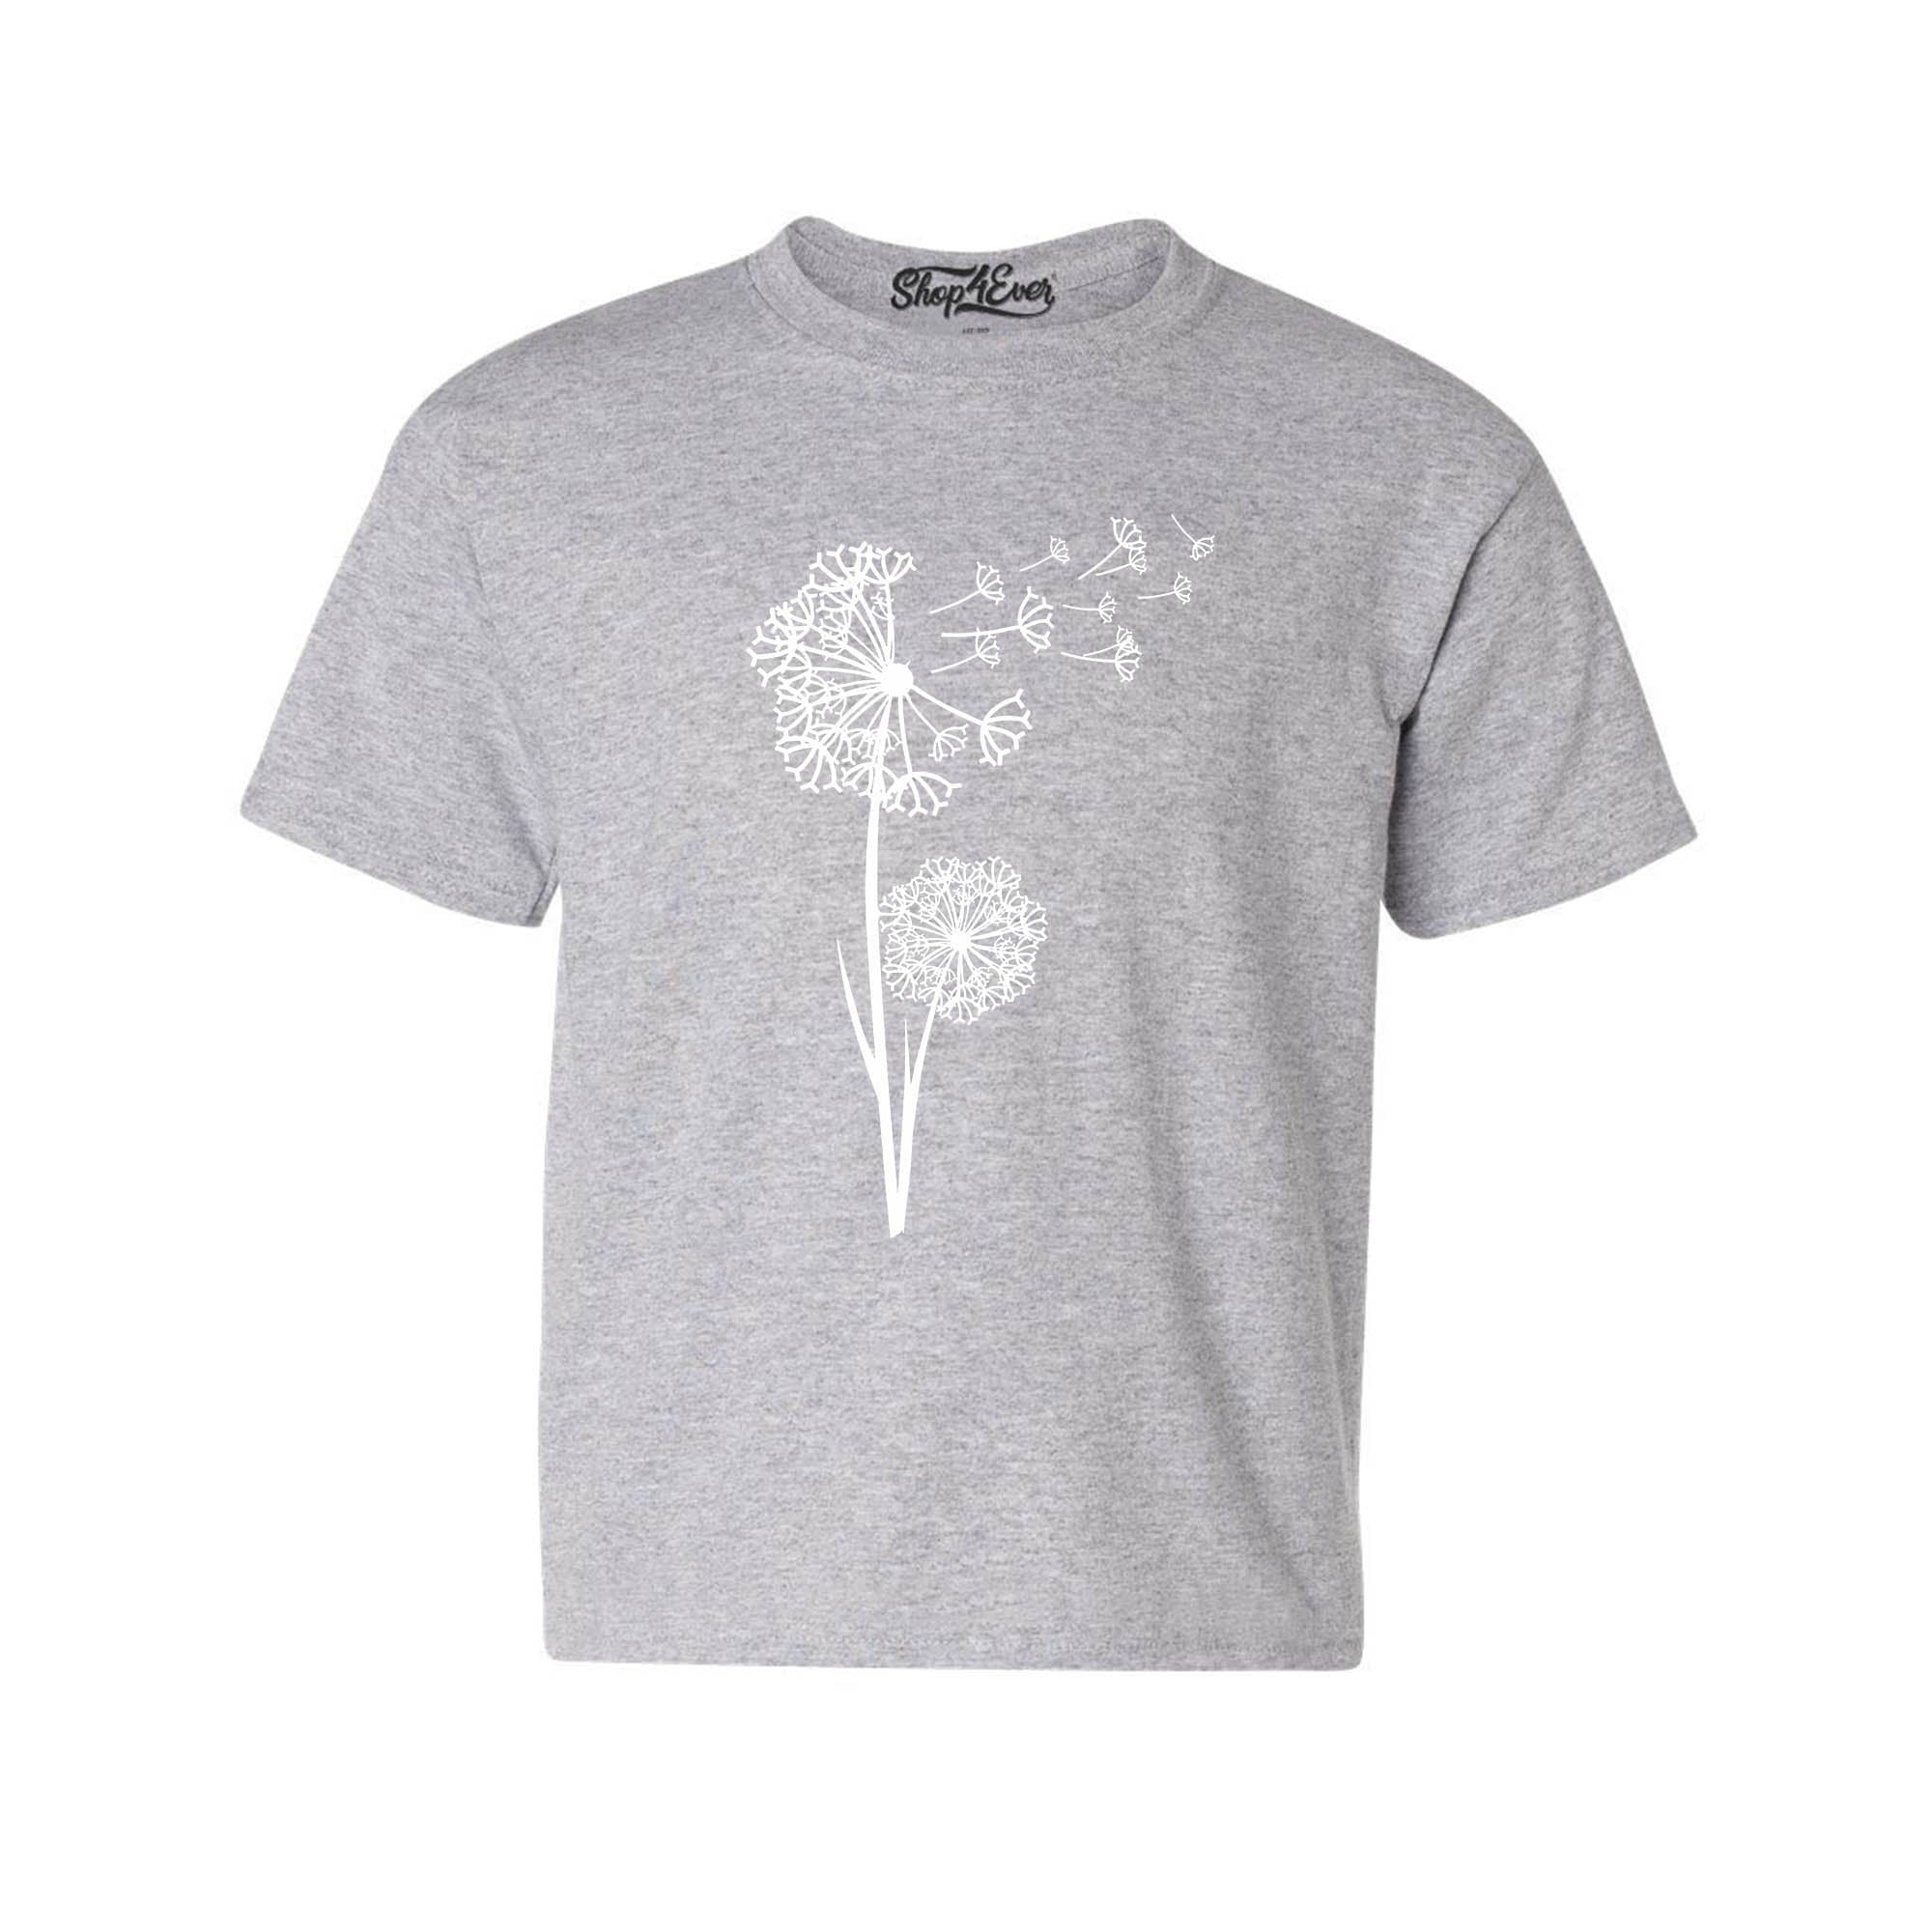 Dandelion Blowing Wish Flower Wildflowers Child's T-Shirt Kids Tee